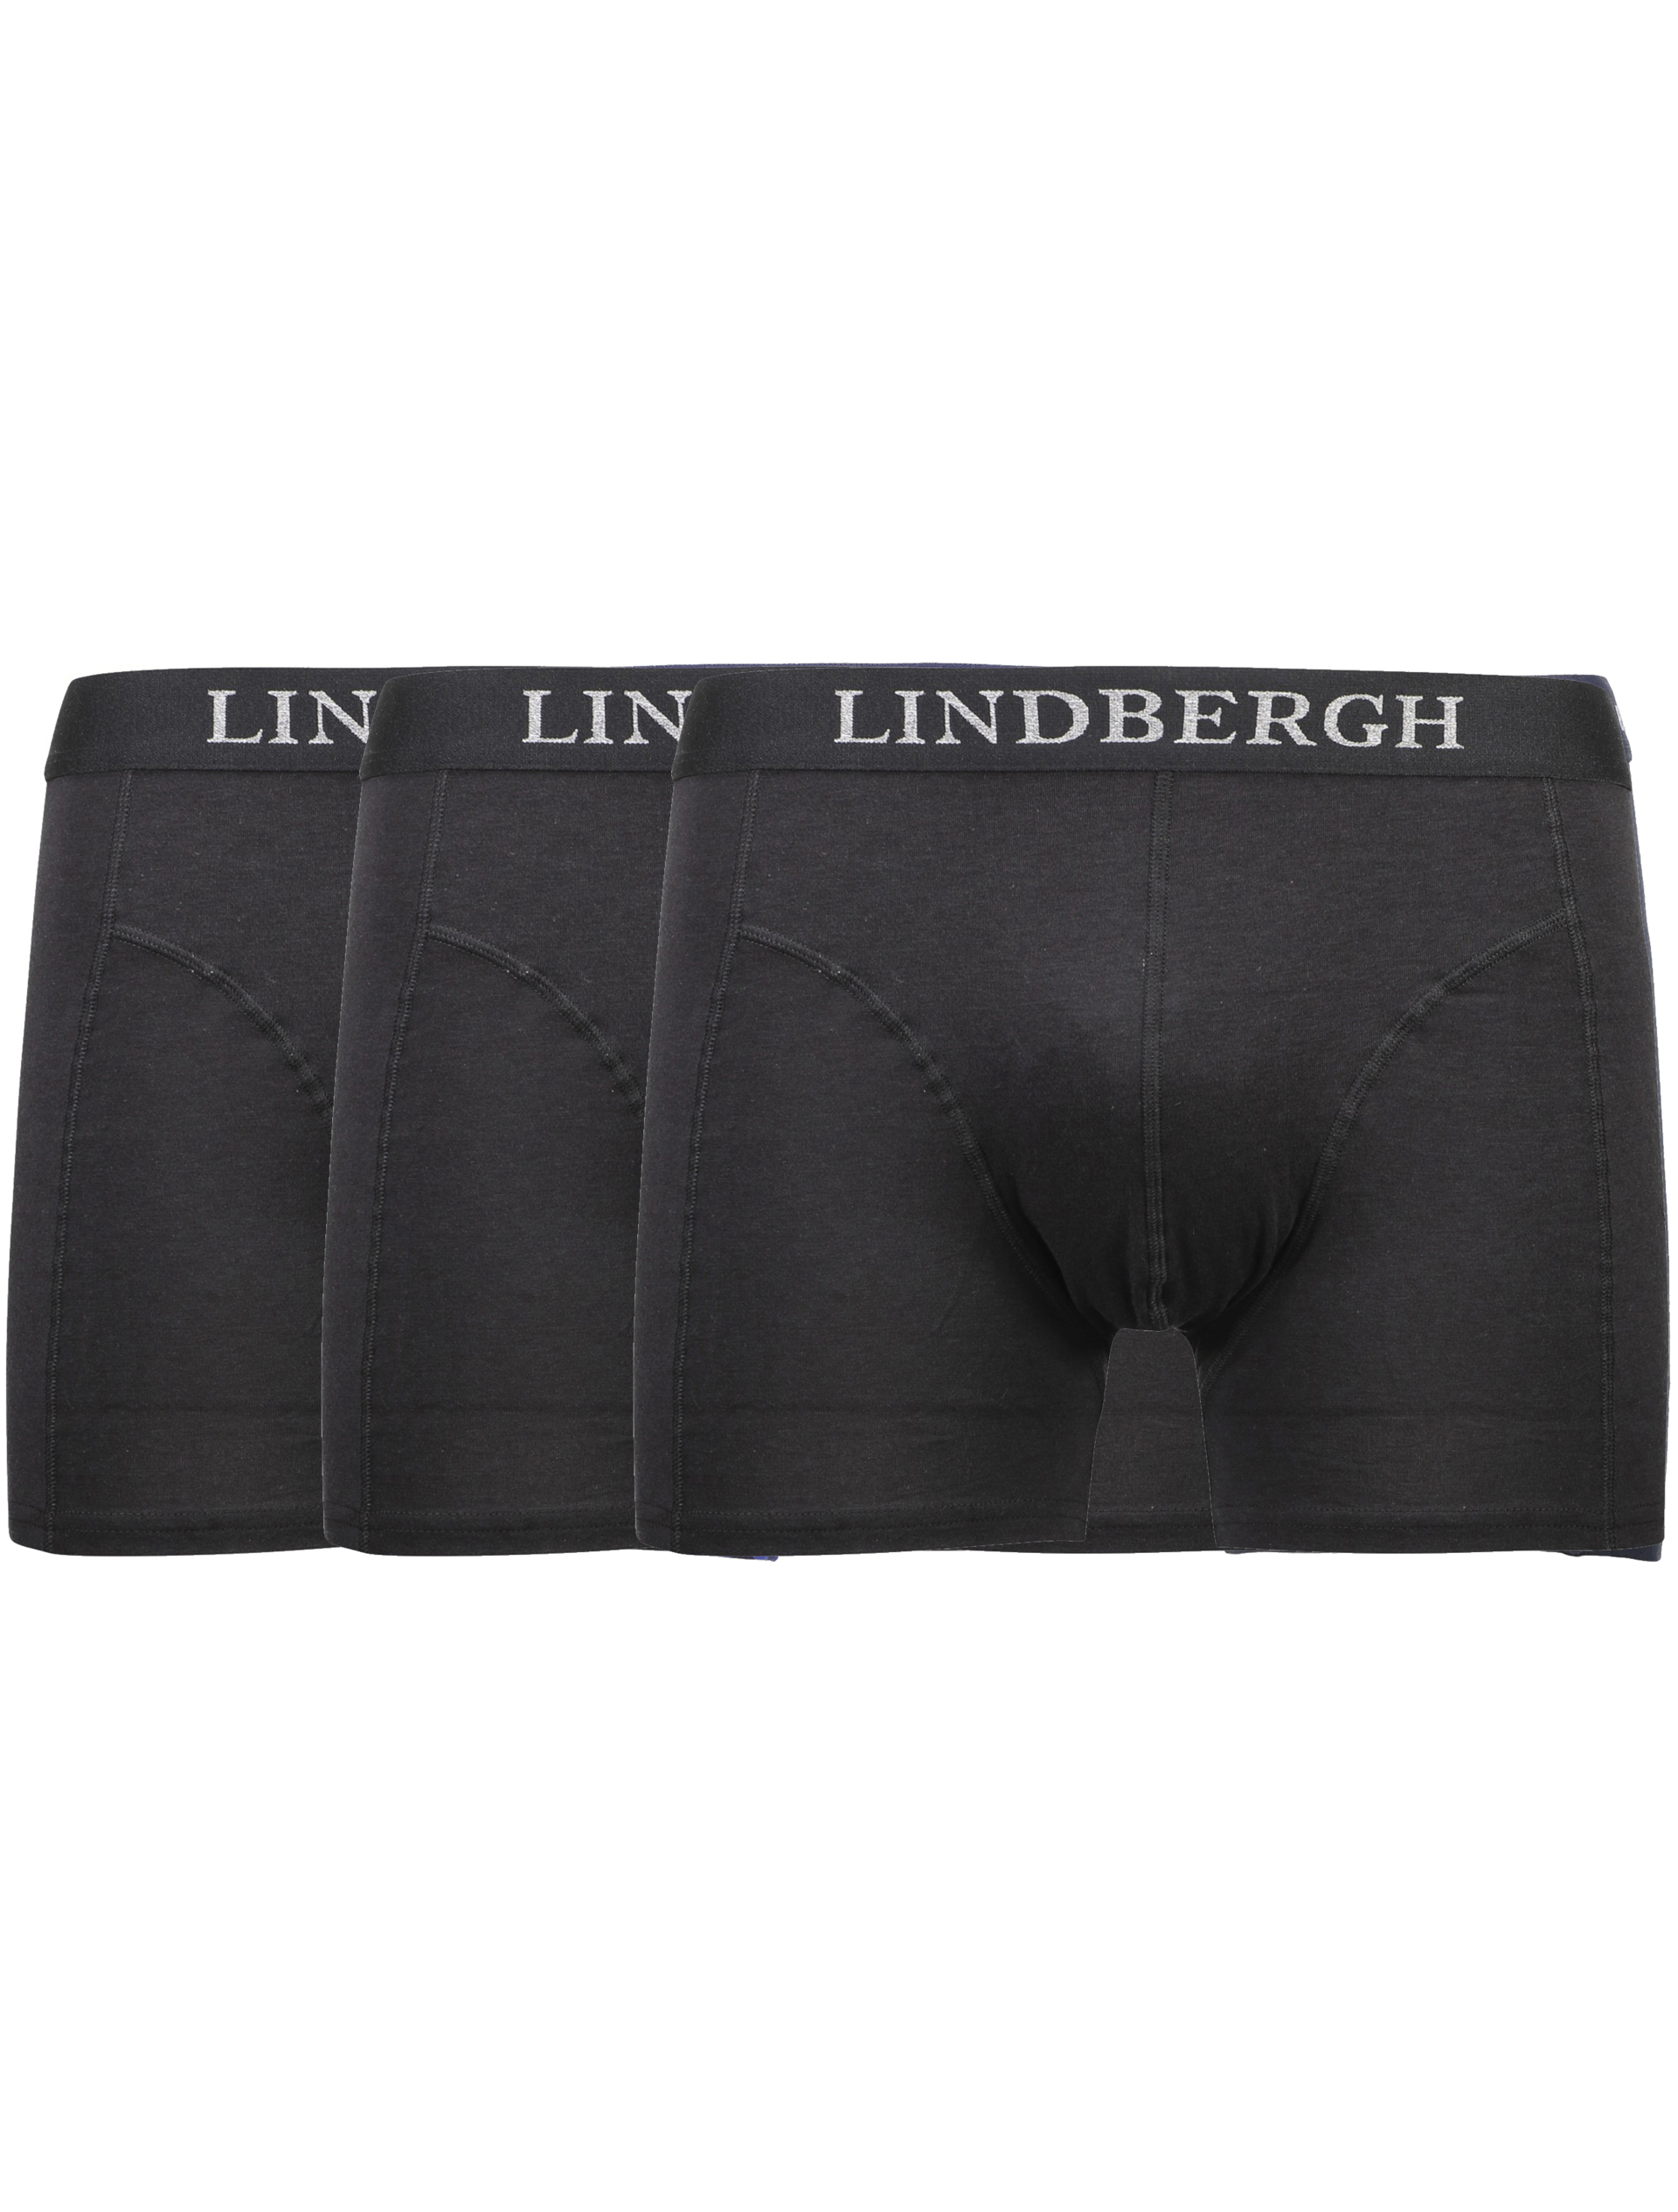 Lindbergh Unterhose schwarz / black